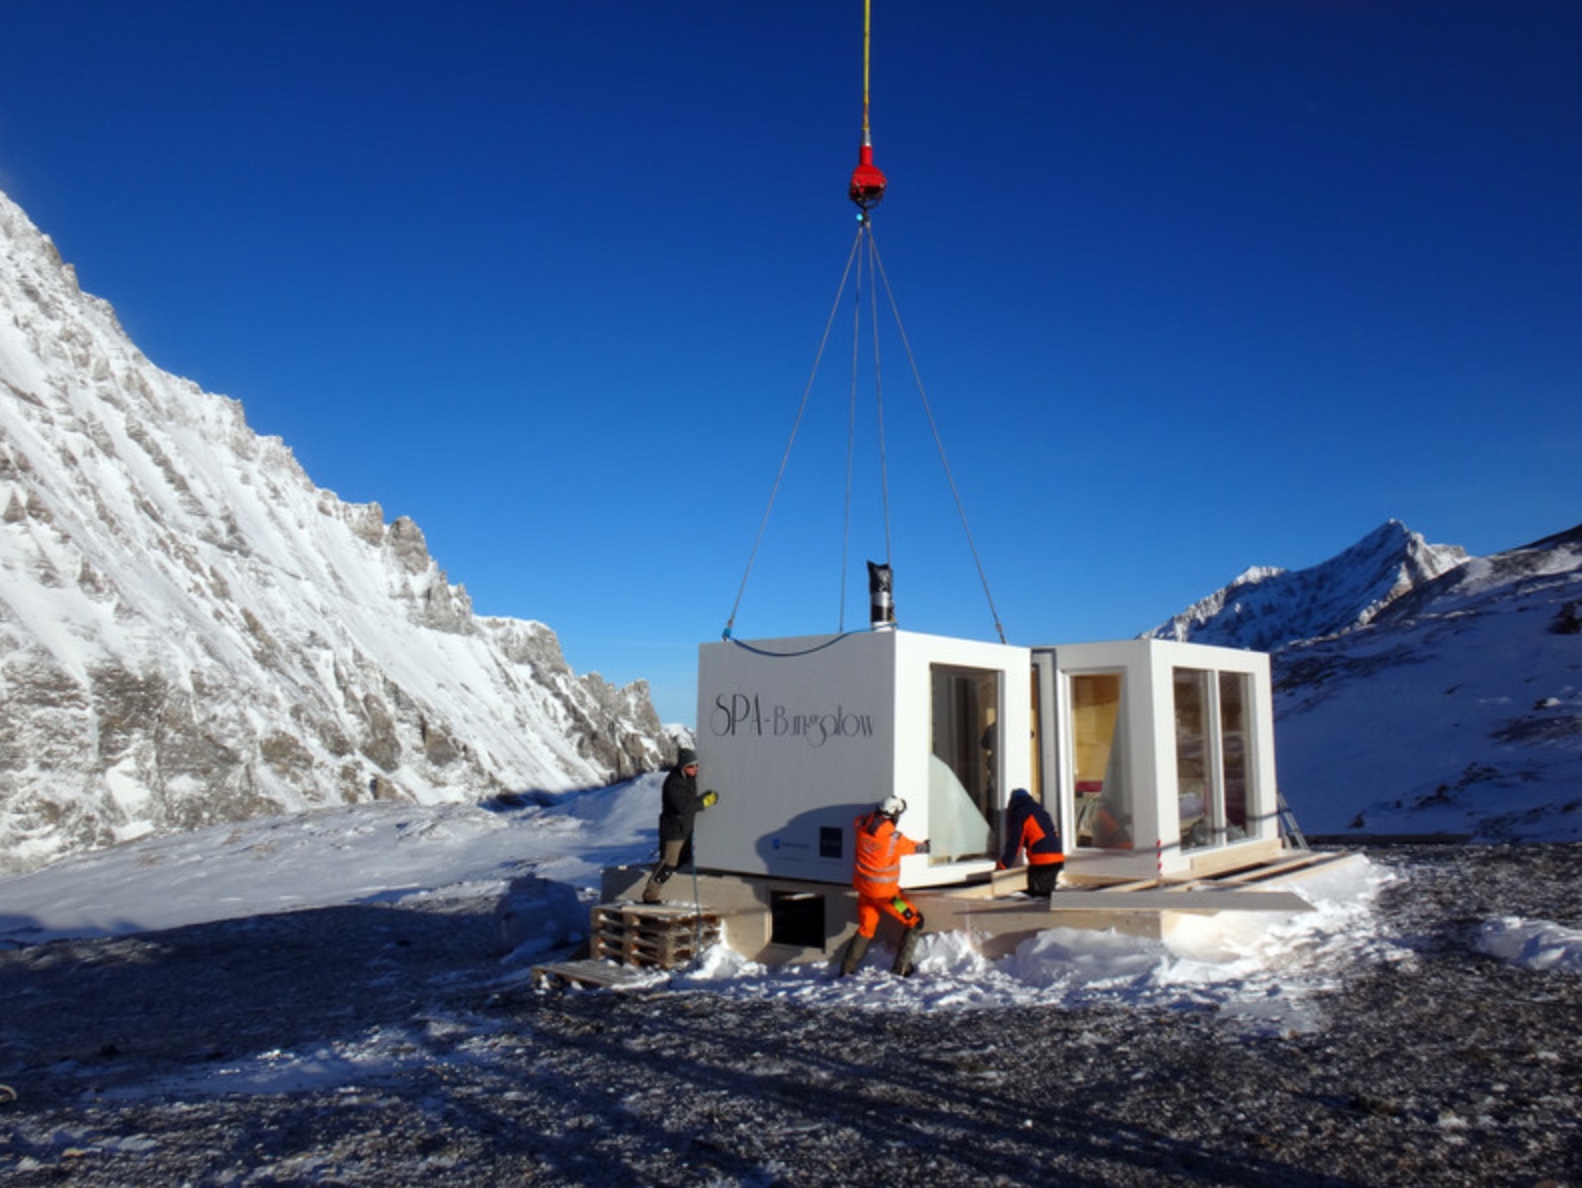 Great Green Project: Alpine SPA-Bungalow features MetsäWood's LVL Panels